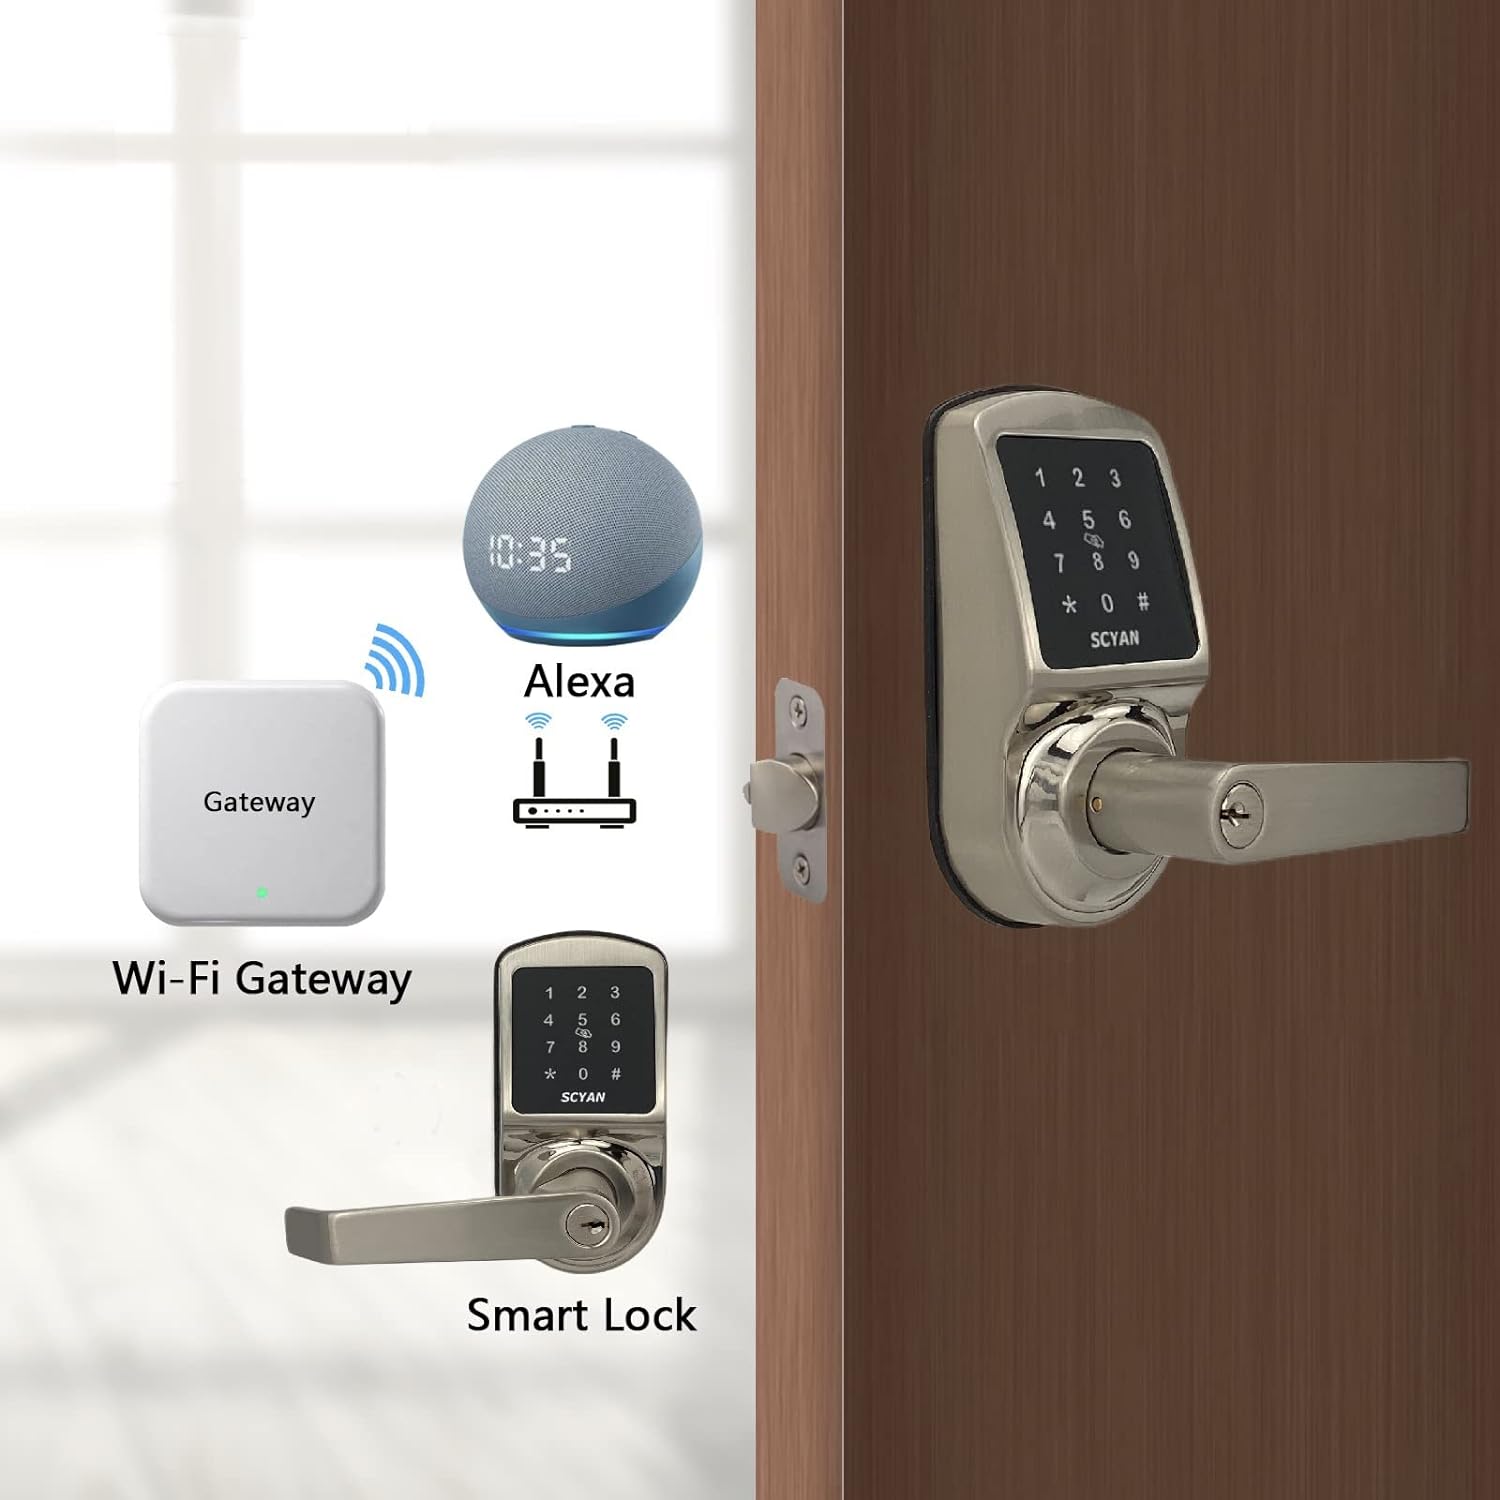 Smart Door Lock, Keyless Entry Door Lock, SCYAN X2 Handle Lock with Touchscreen Keypad Access, Auto Lock, App Control for Home, Airbnb Rental House, Satin Nickel